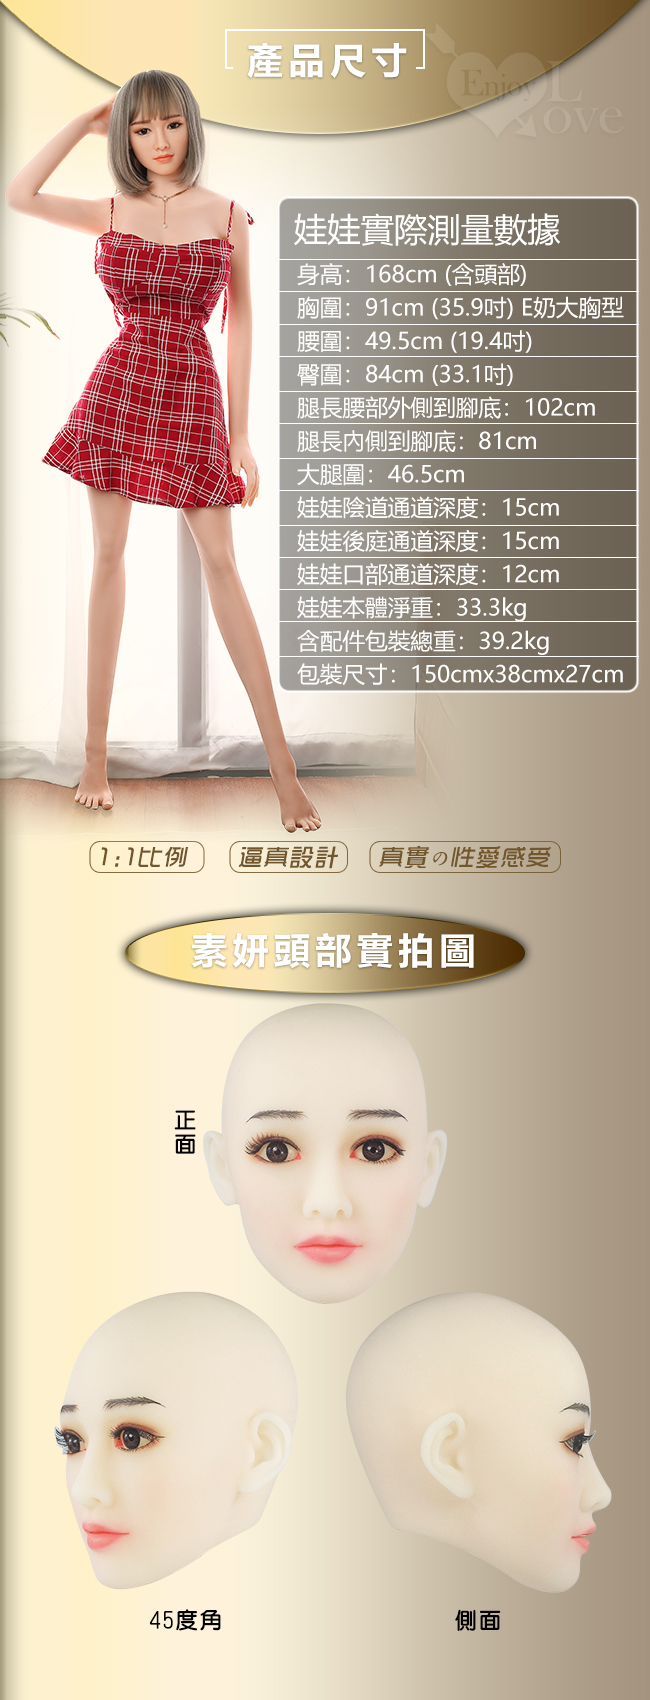 《 So Yeon 素妍 ‧ 絕對服從賢淑巨乳少妻 》全實體矽膠+骨骼系統真人玩伴 ﹝168cm / 33kg﹞